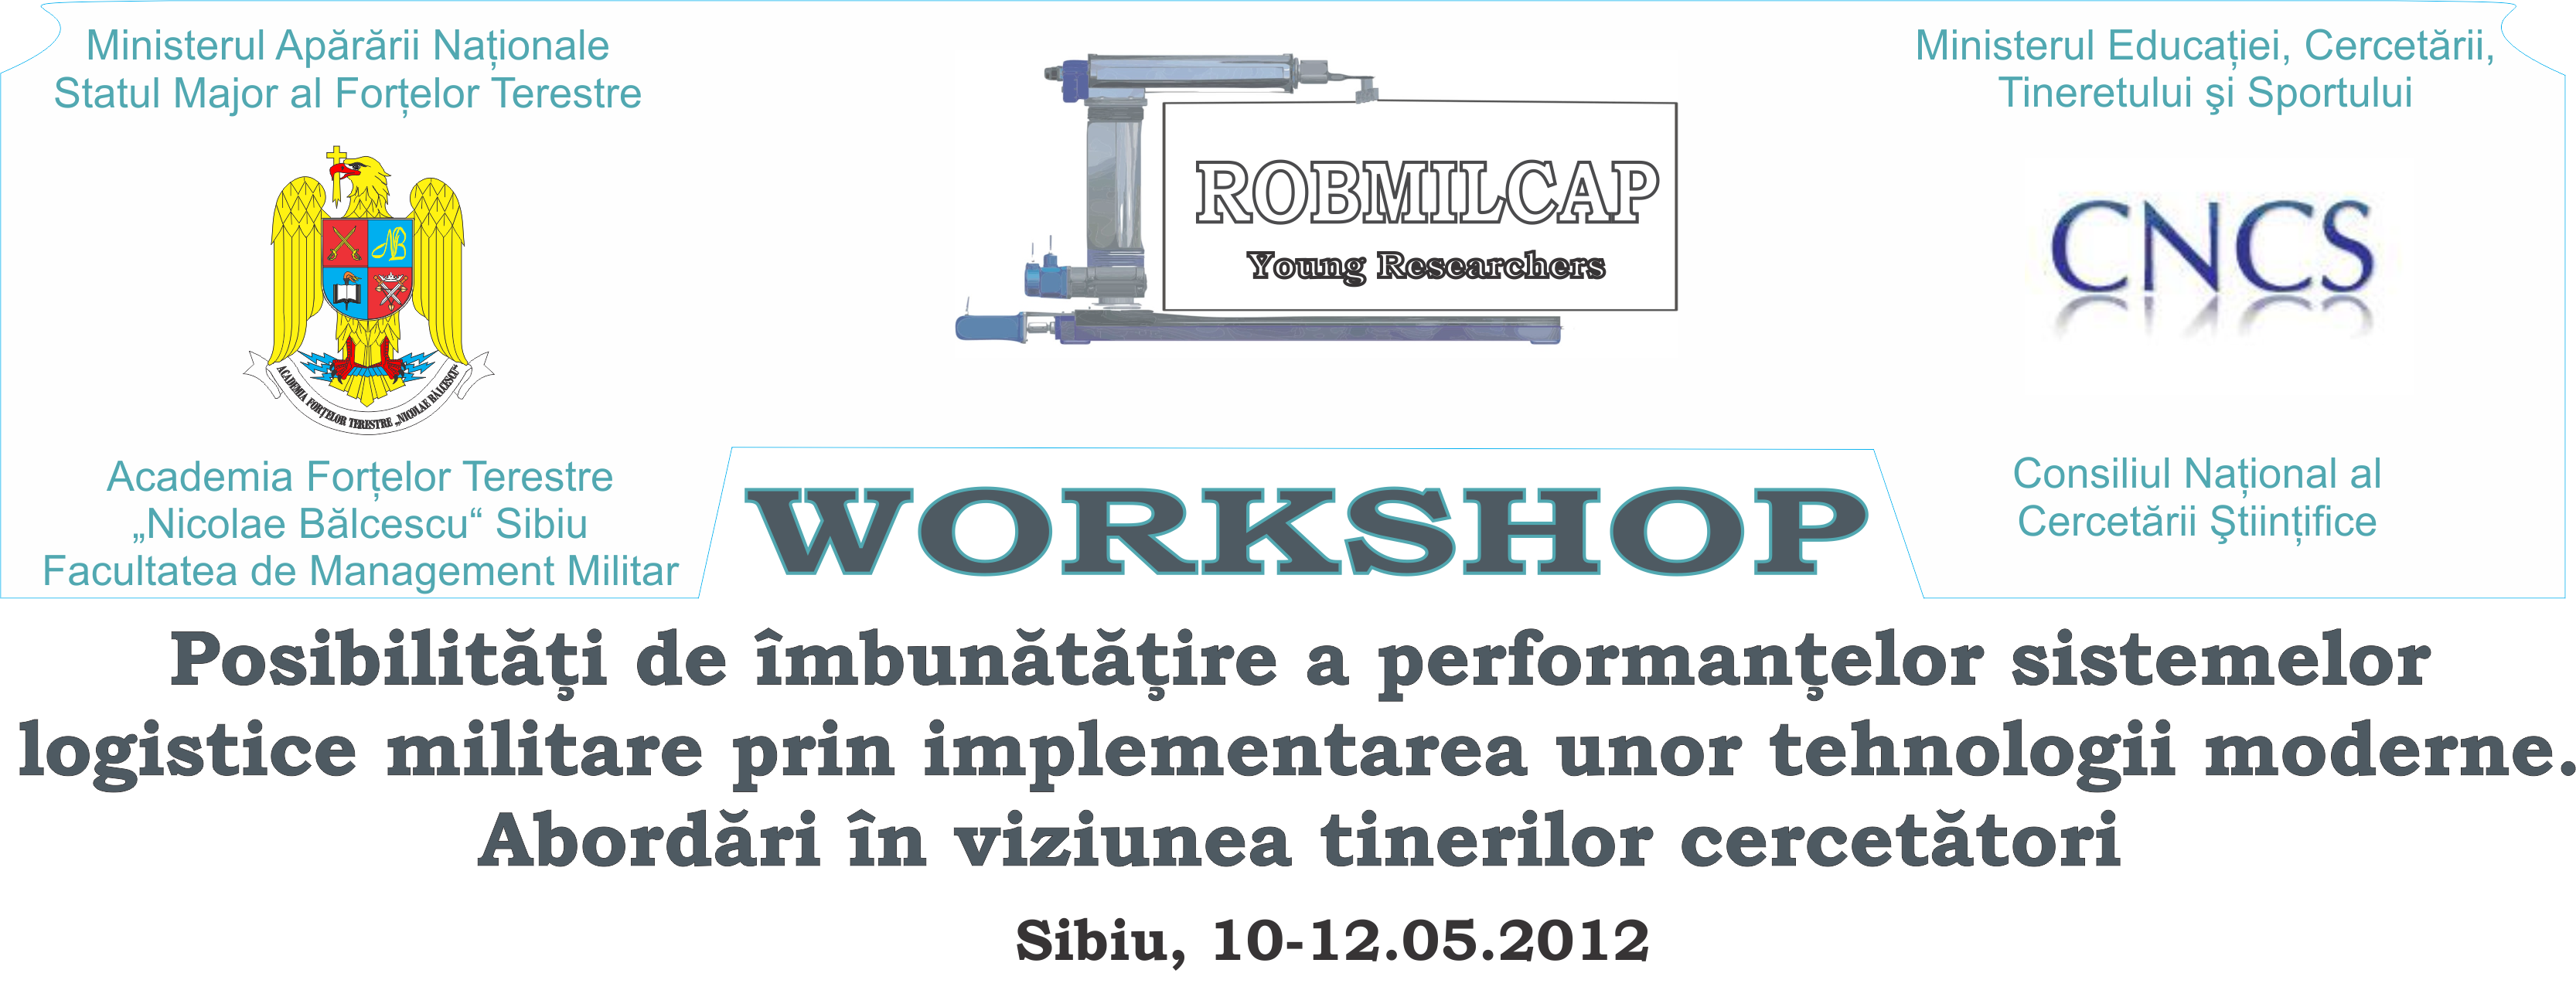 Workshop - 10-12.05.2012